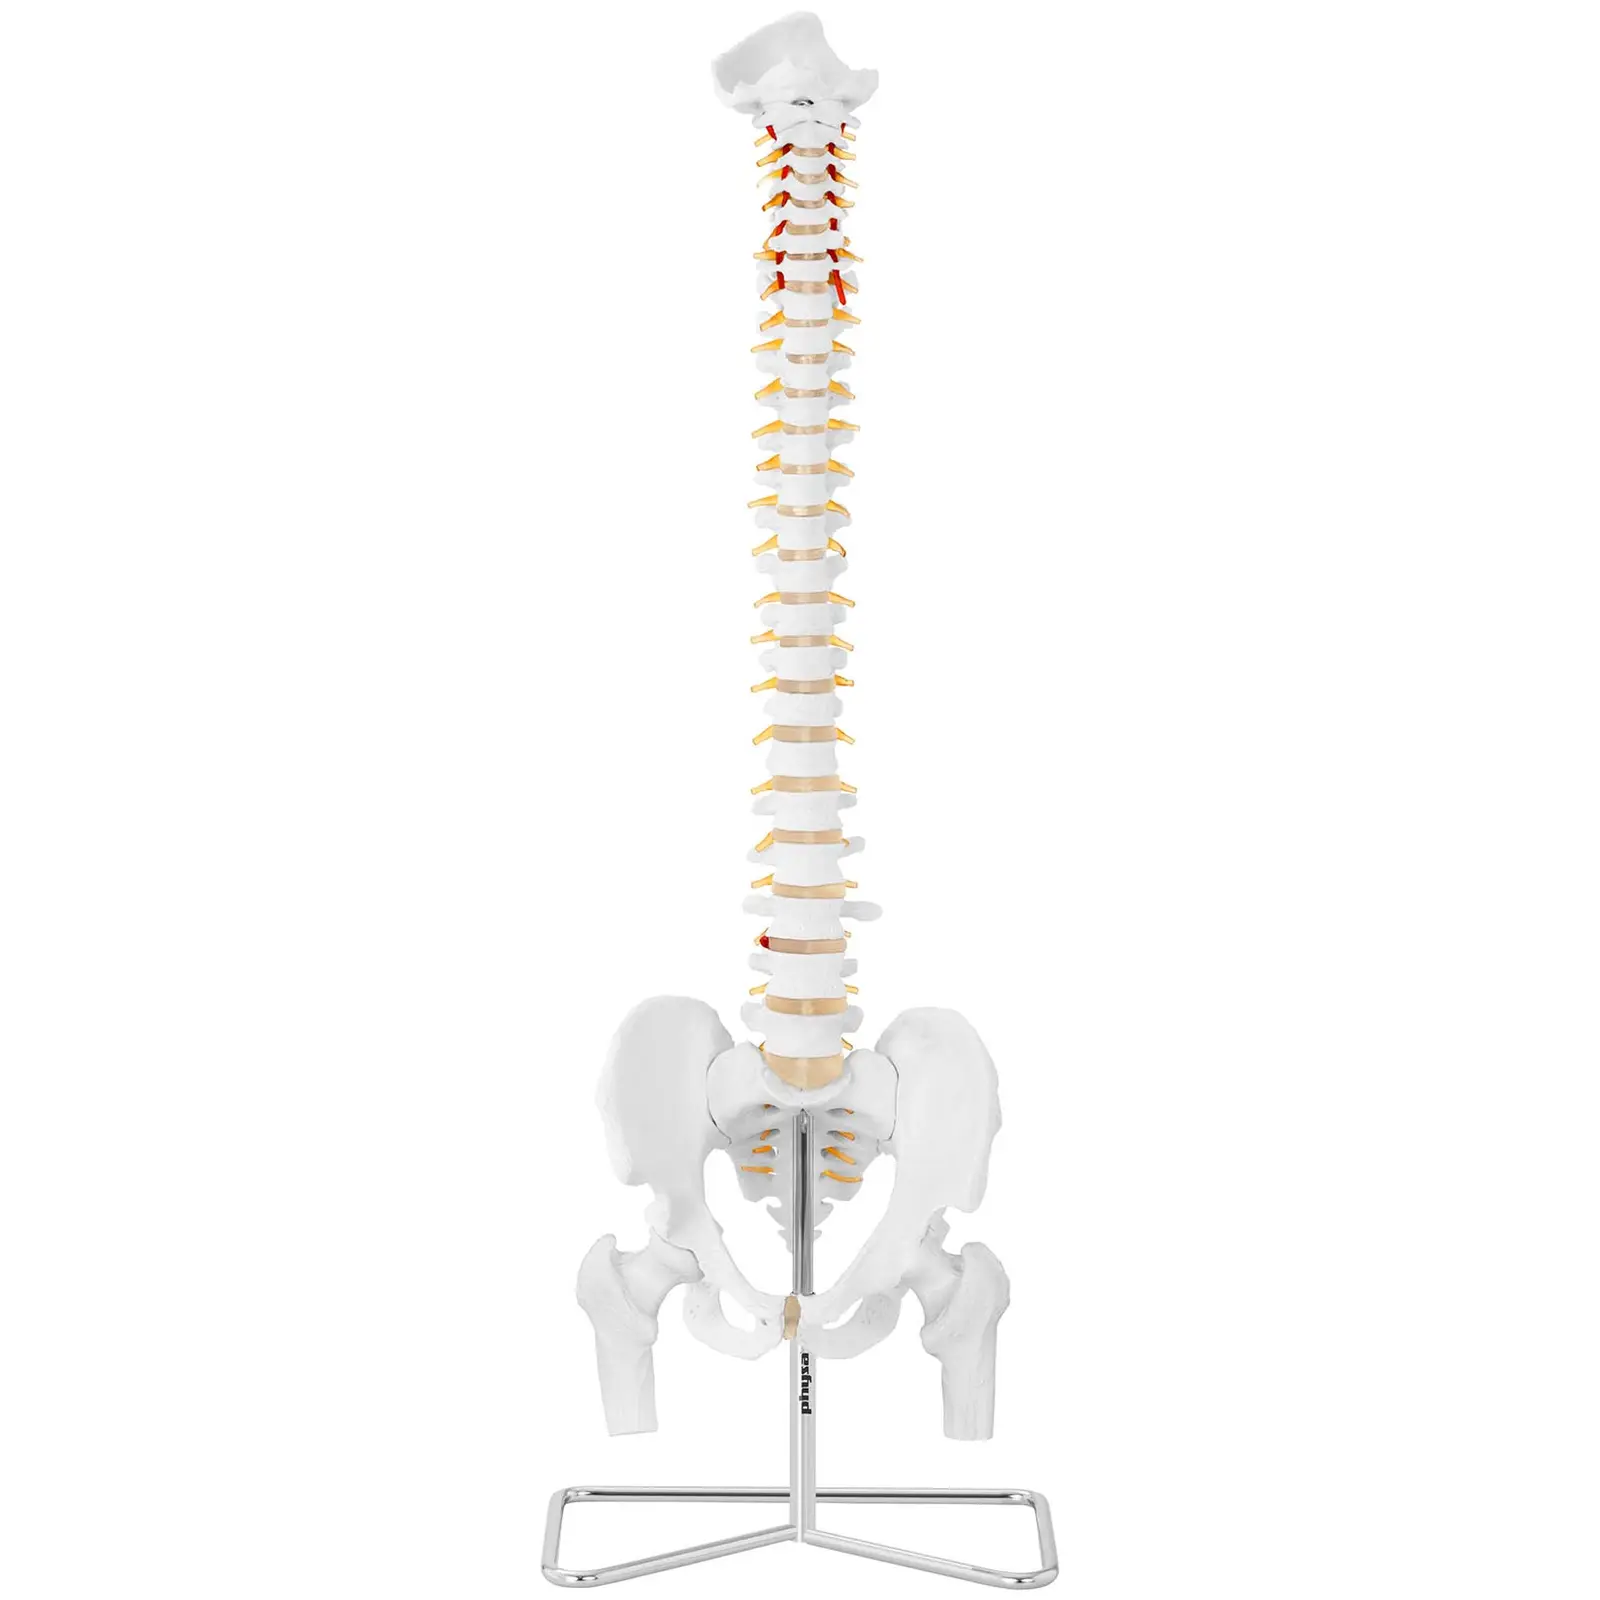 Spine Model with Pelvis